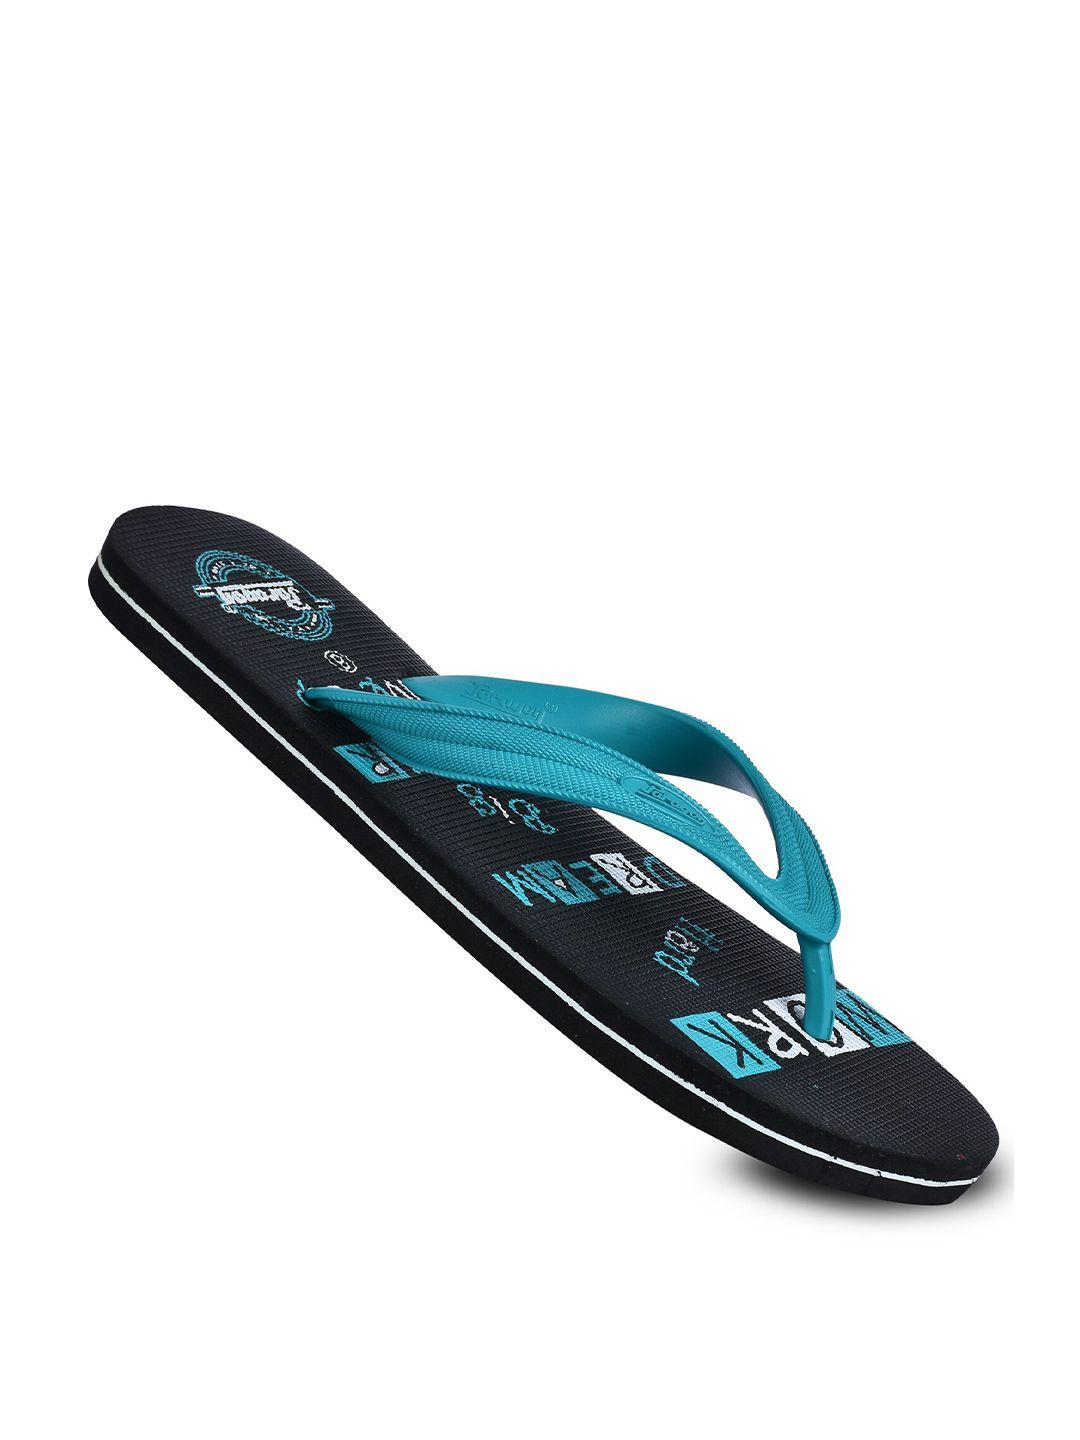 paragon-men-blue-&-black-printed-rubber-thong-flip-flops